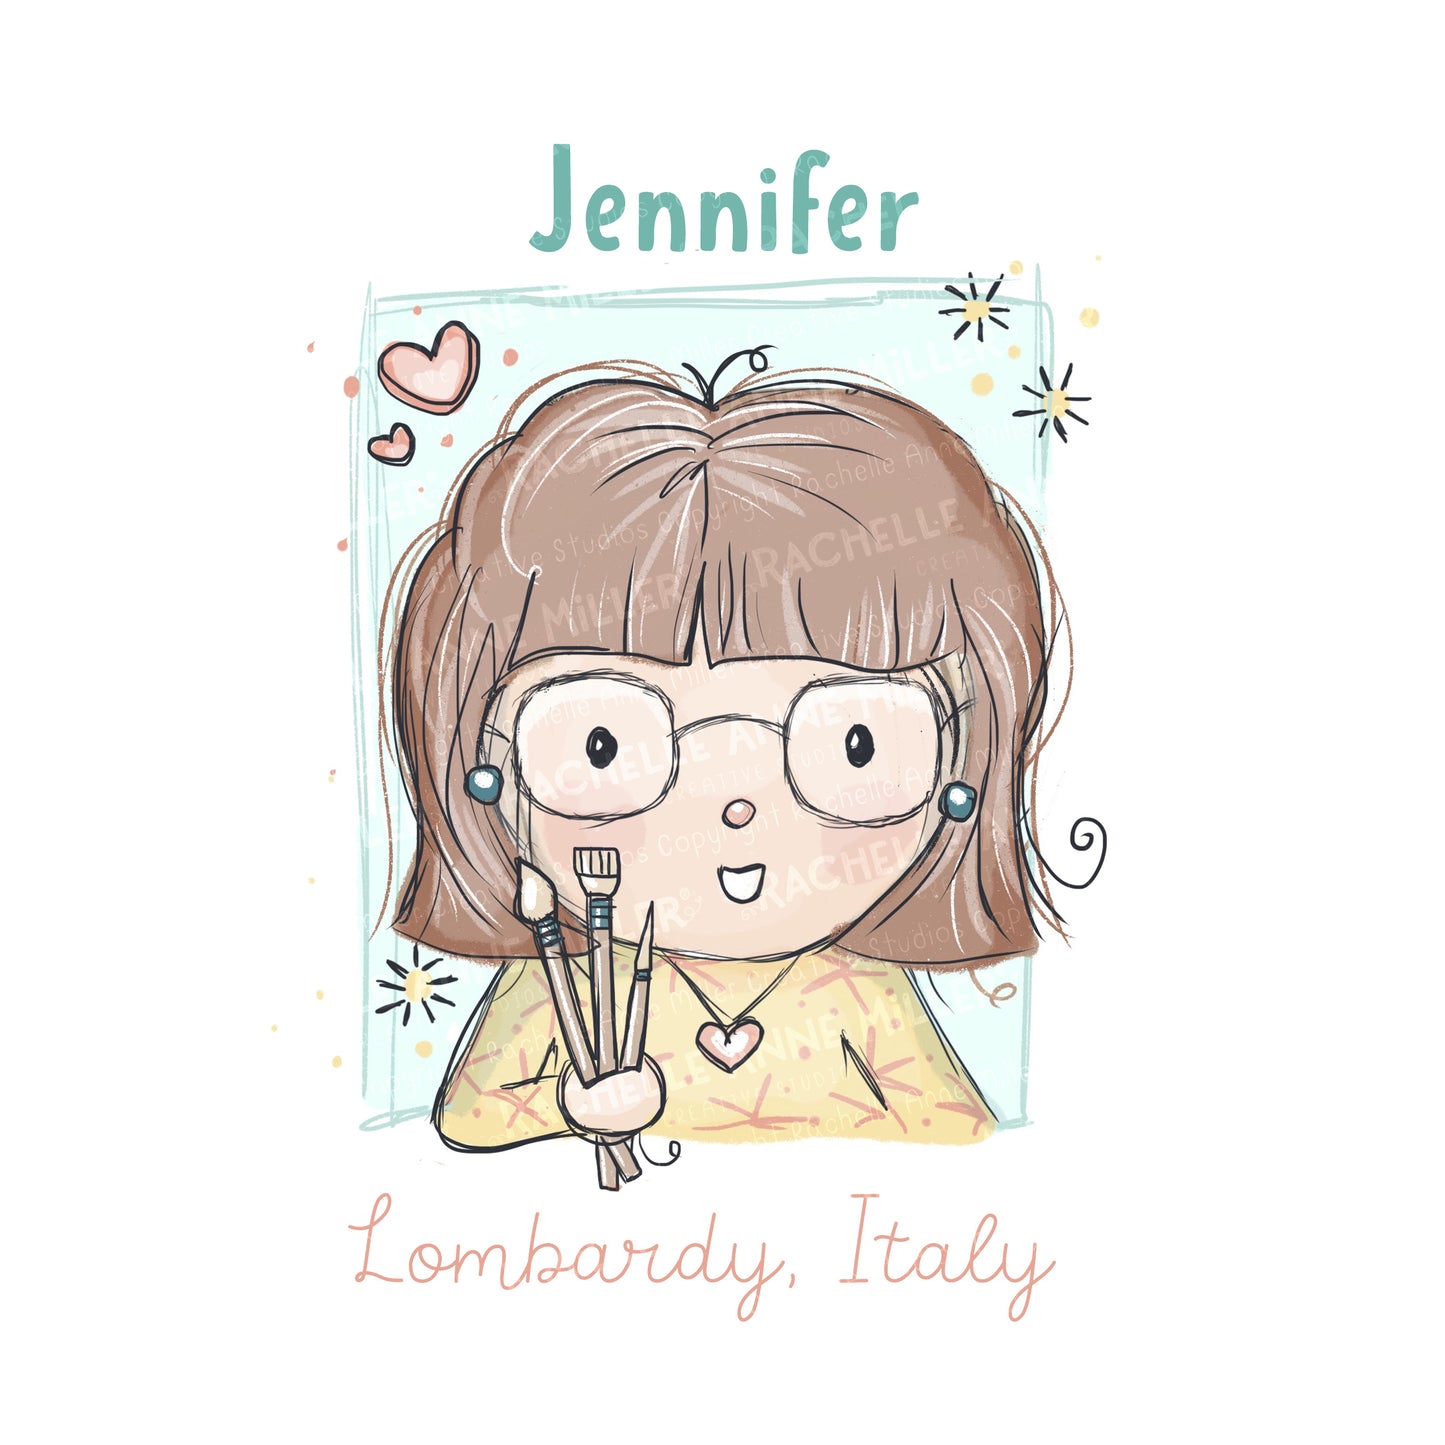 'Jennifer the Painter' Profile Digital Stamp